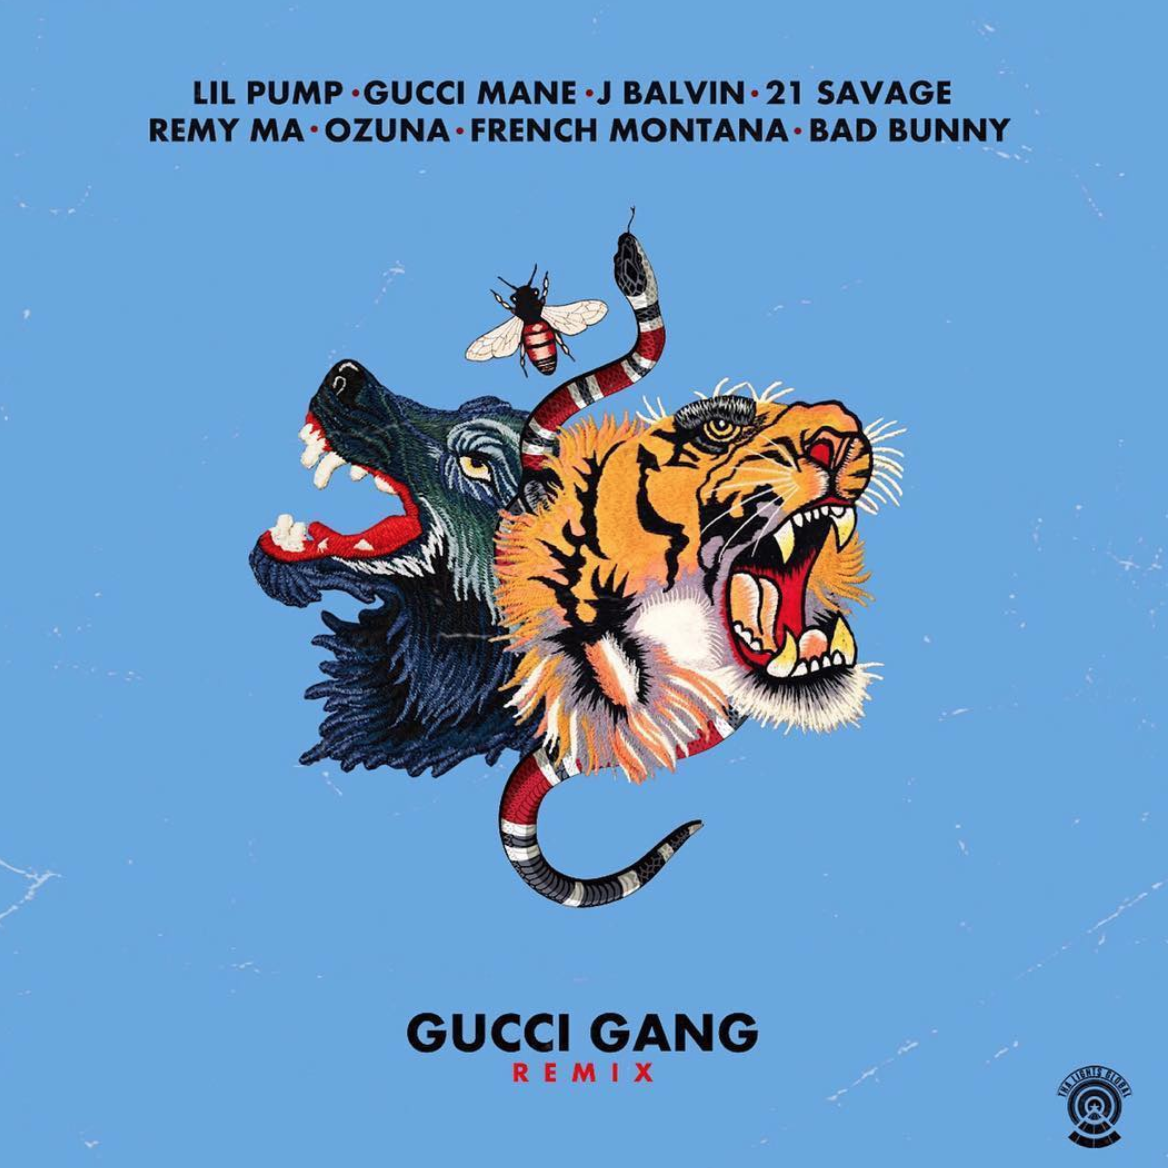 New Music: Lil Pump – “Gucci Gang (Remix)” Feat. Gucci Mane, French Montana, 21 Savage, Remy Ma, J Balvin, Bad Bunny & Ozuna [LISTEN]